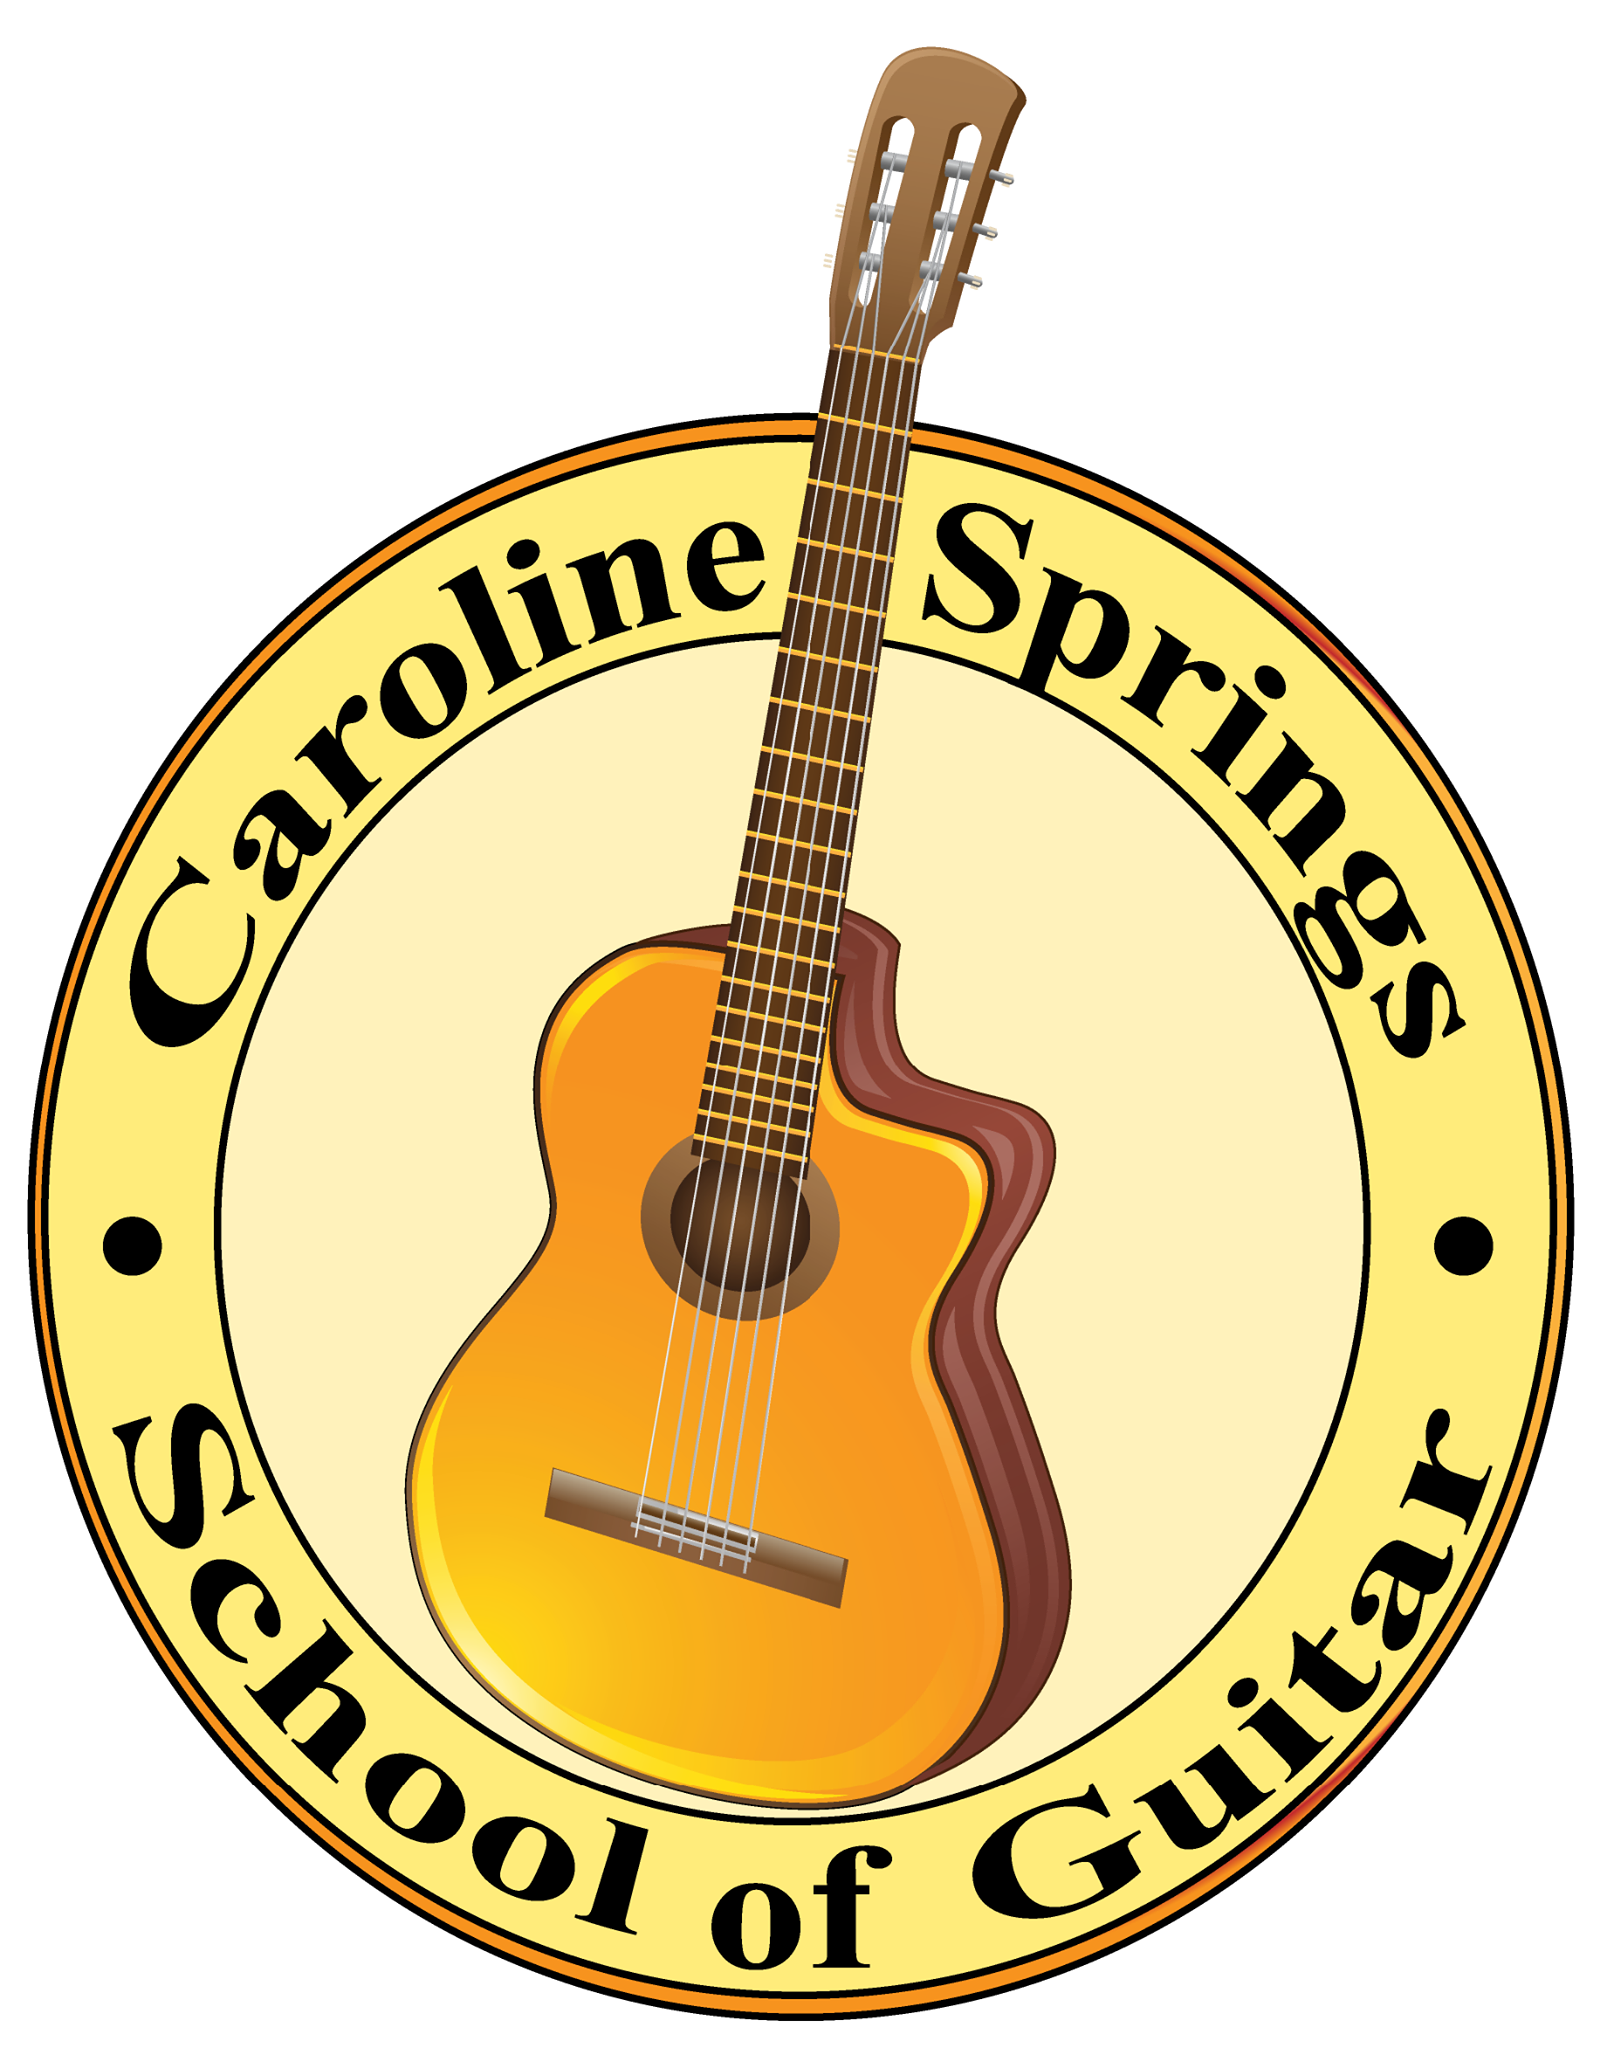 Caroline Springs School of Guitar Logo